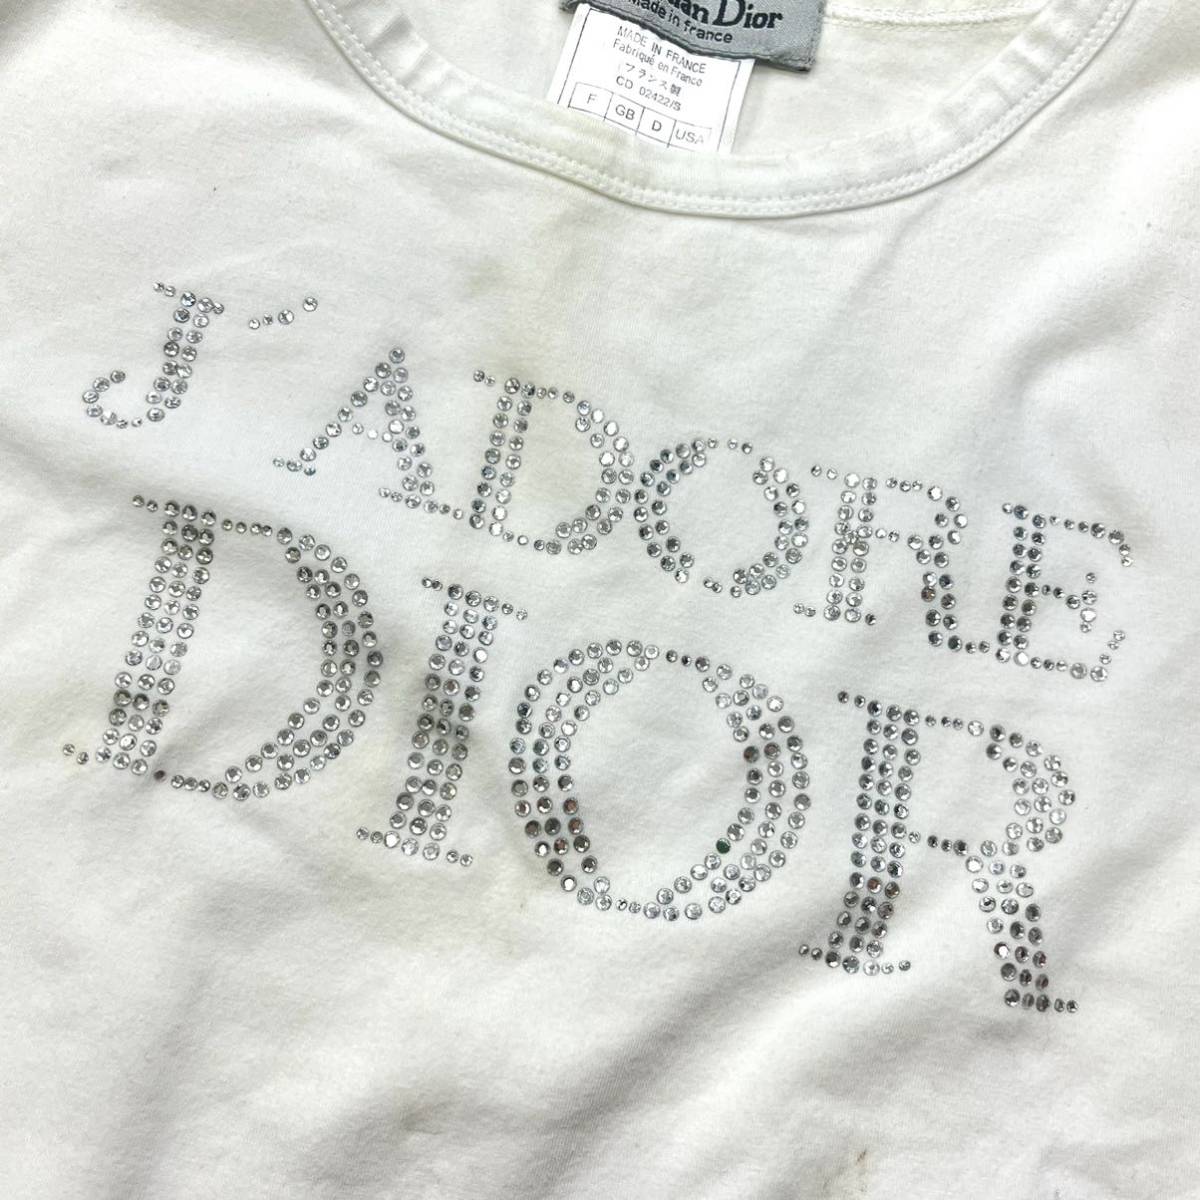 Christian Dior クリスチャン ディオール Vintage ヴィンテージ オールド J'ADORE DIOR ラインストーンロゴ コットン  半袖Tシャツ